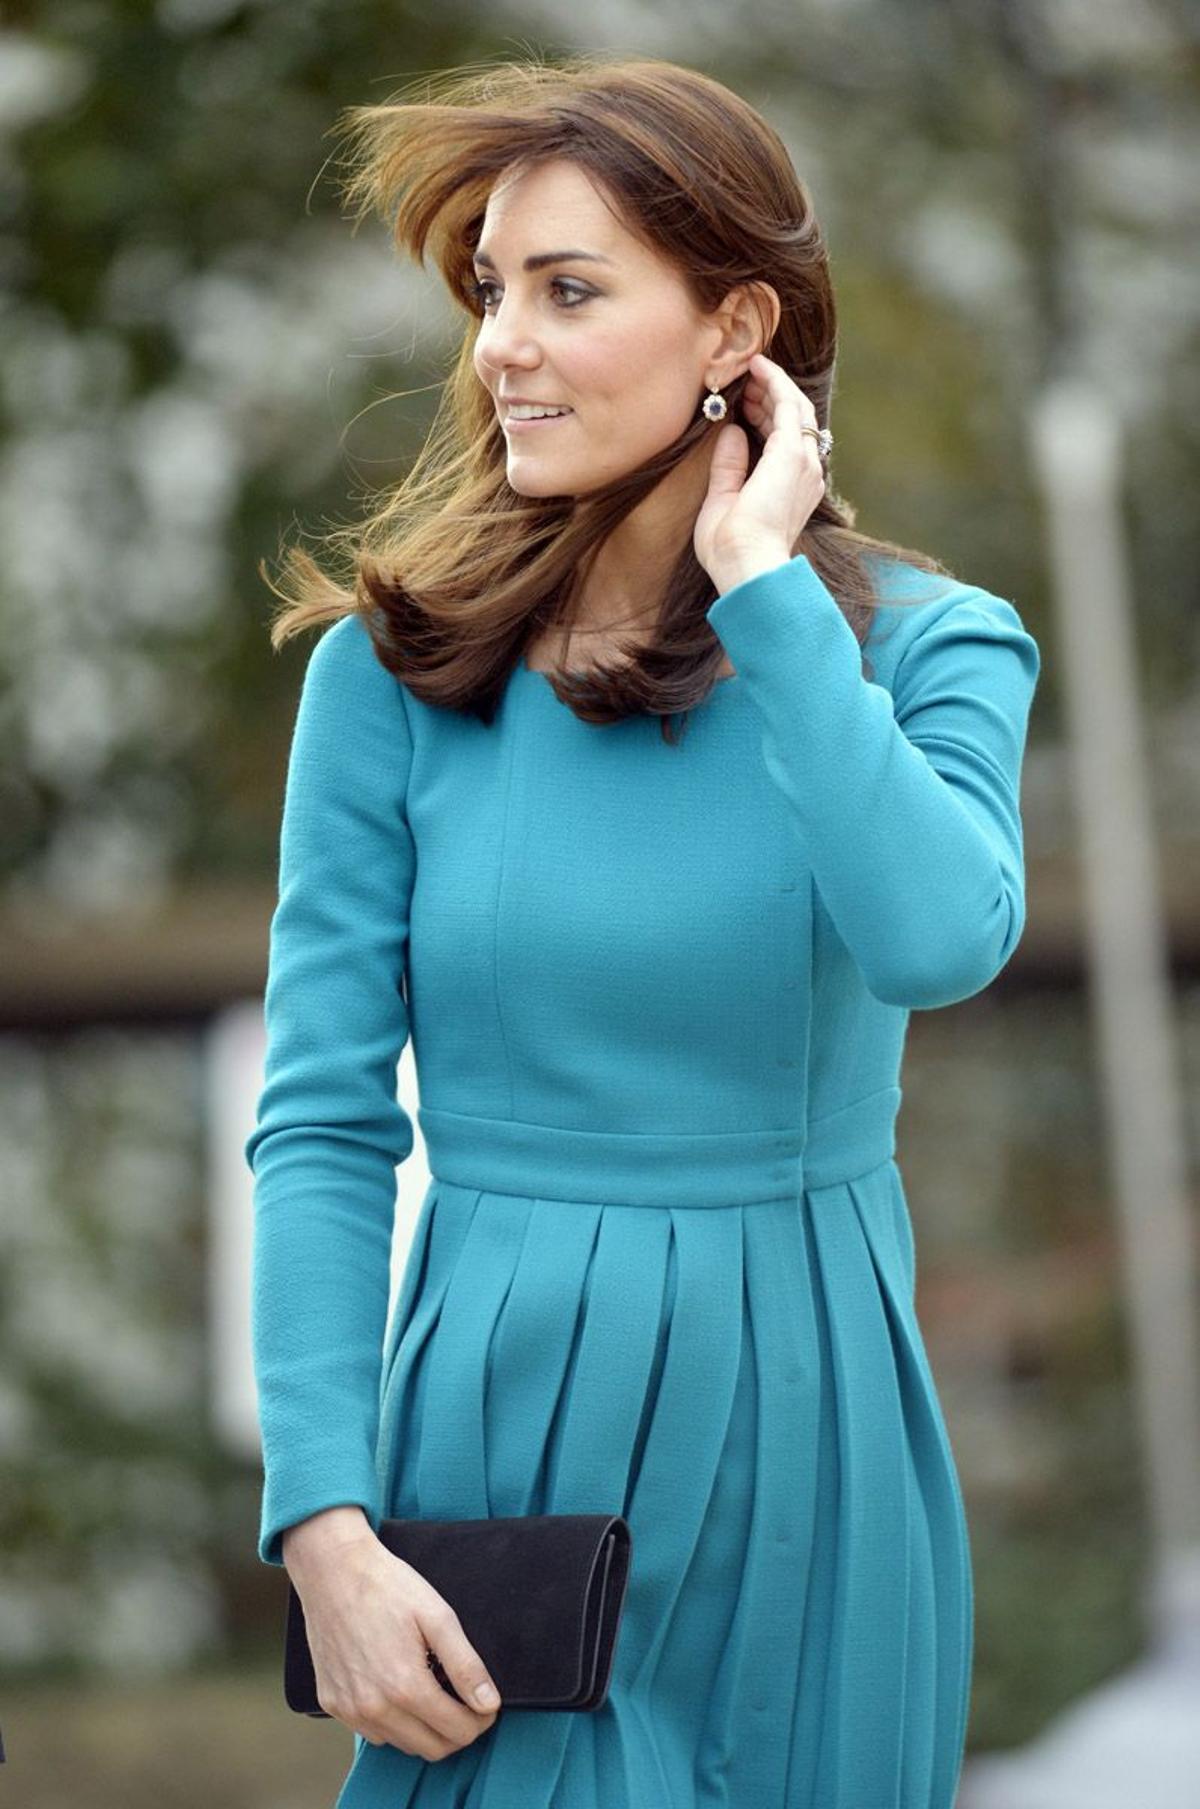 El gesto favorito de Kate Middleton: mano, pelo y oreja